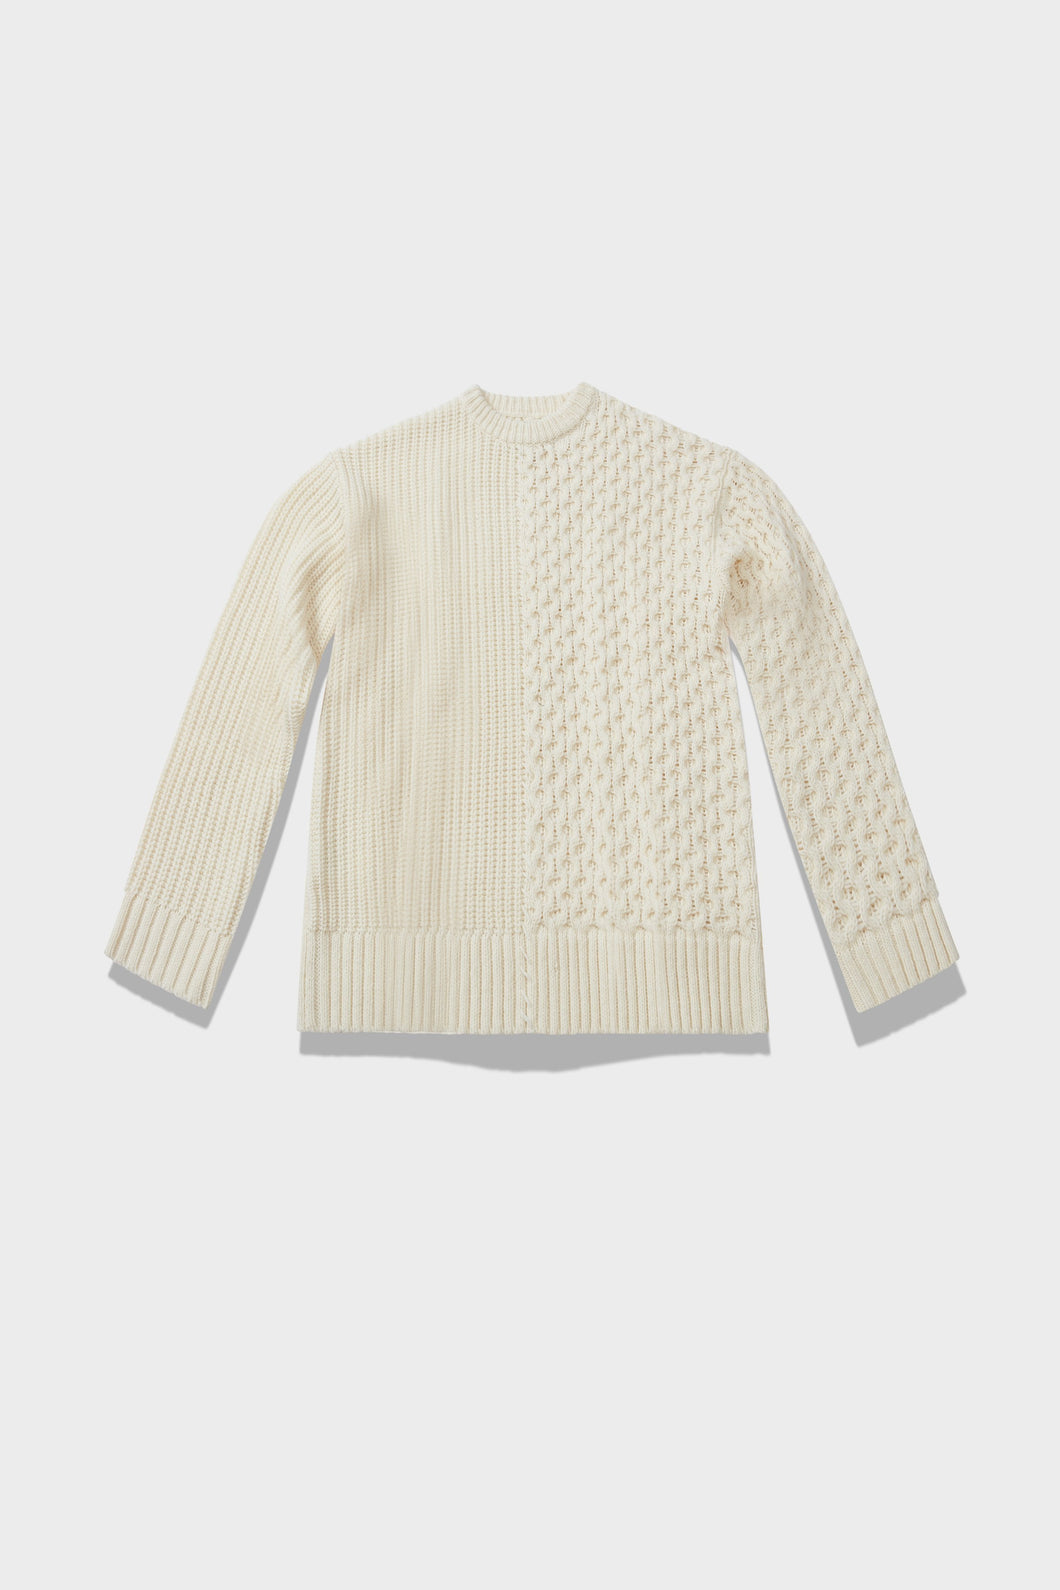 Altuzarra_Patchwork Sweater-Ivory